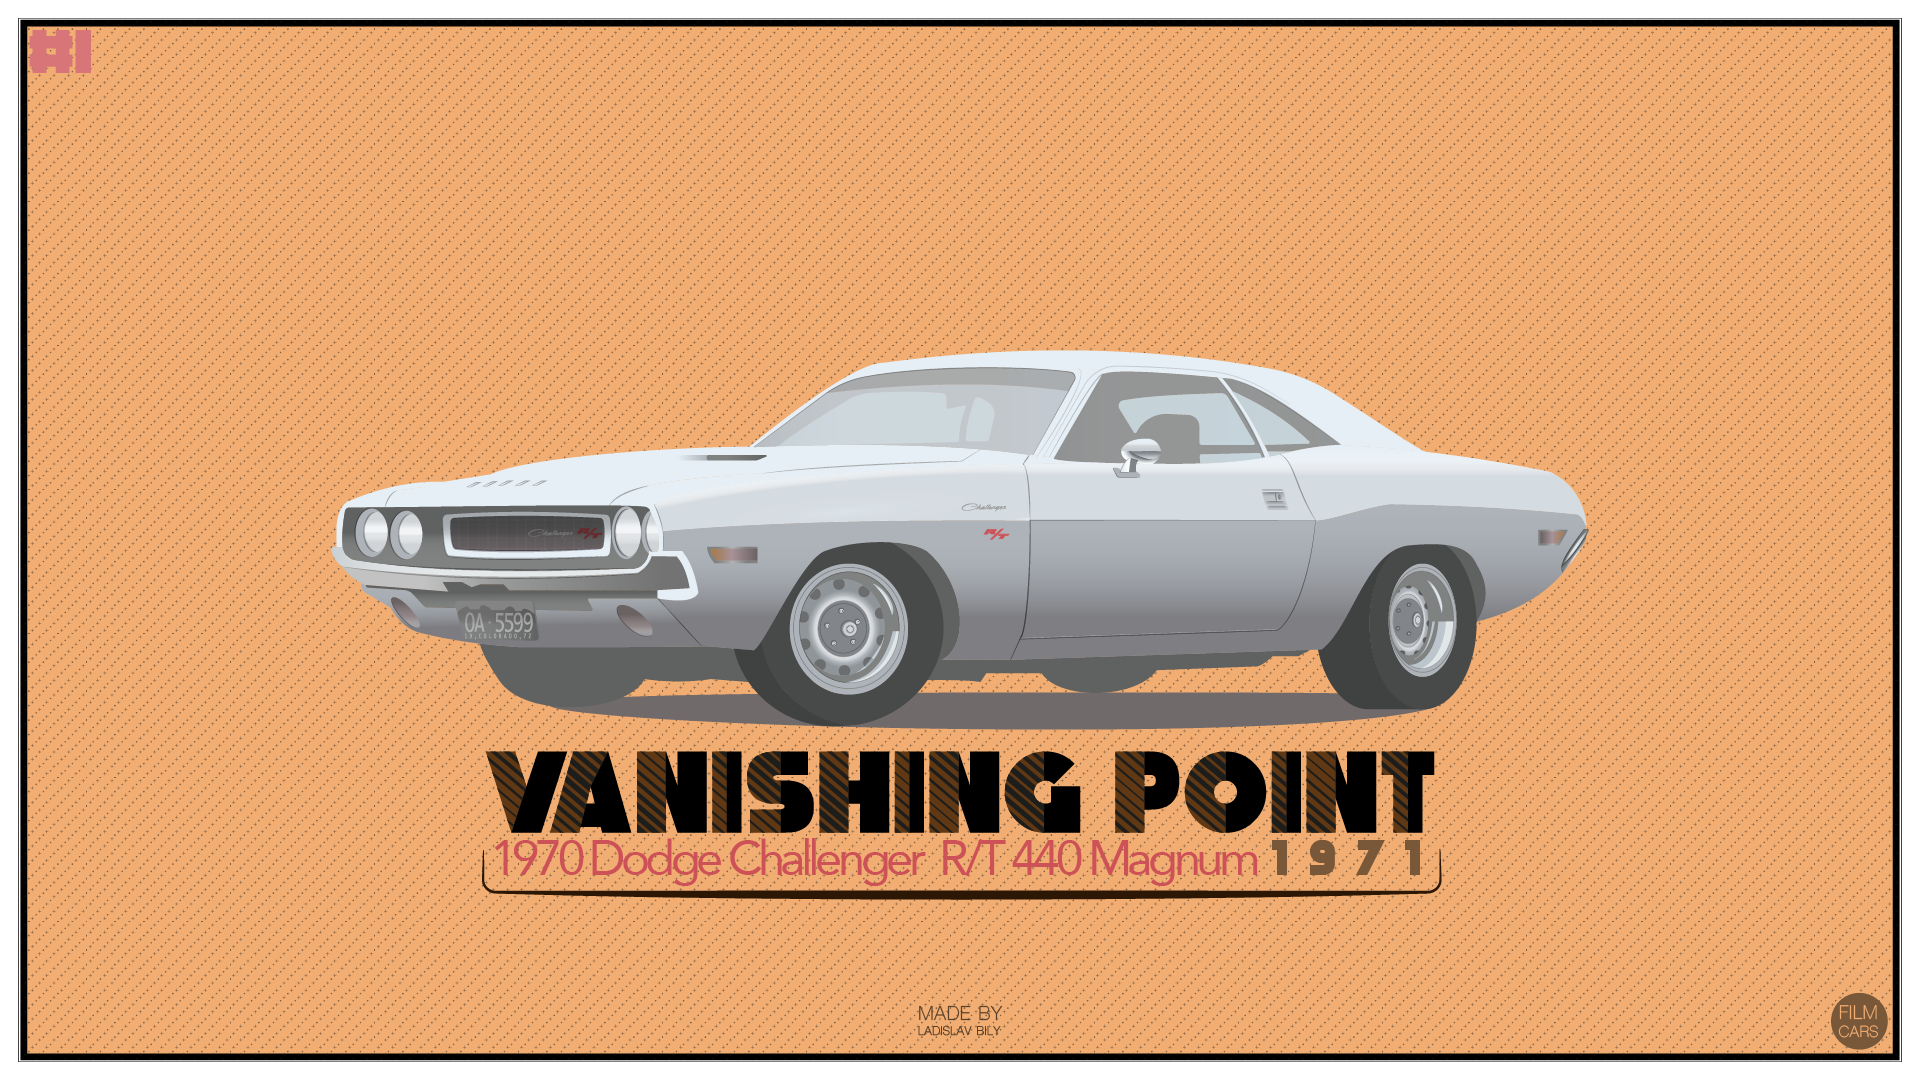 Film Cars Project / Vanishing Point